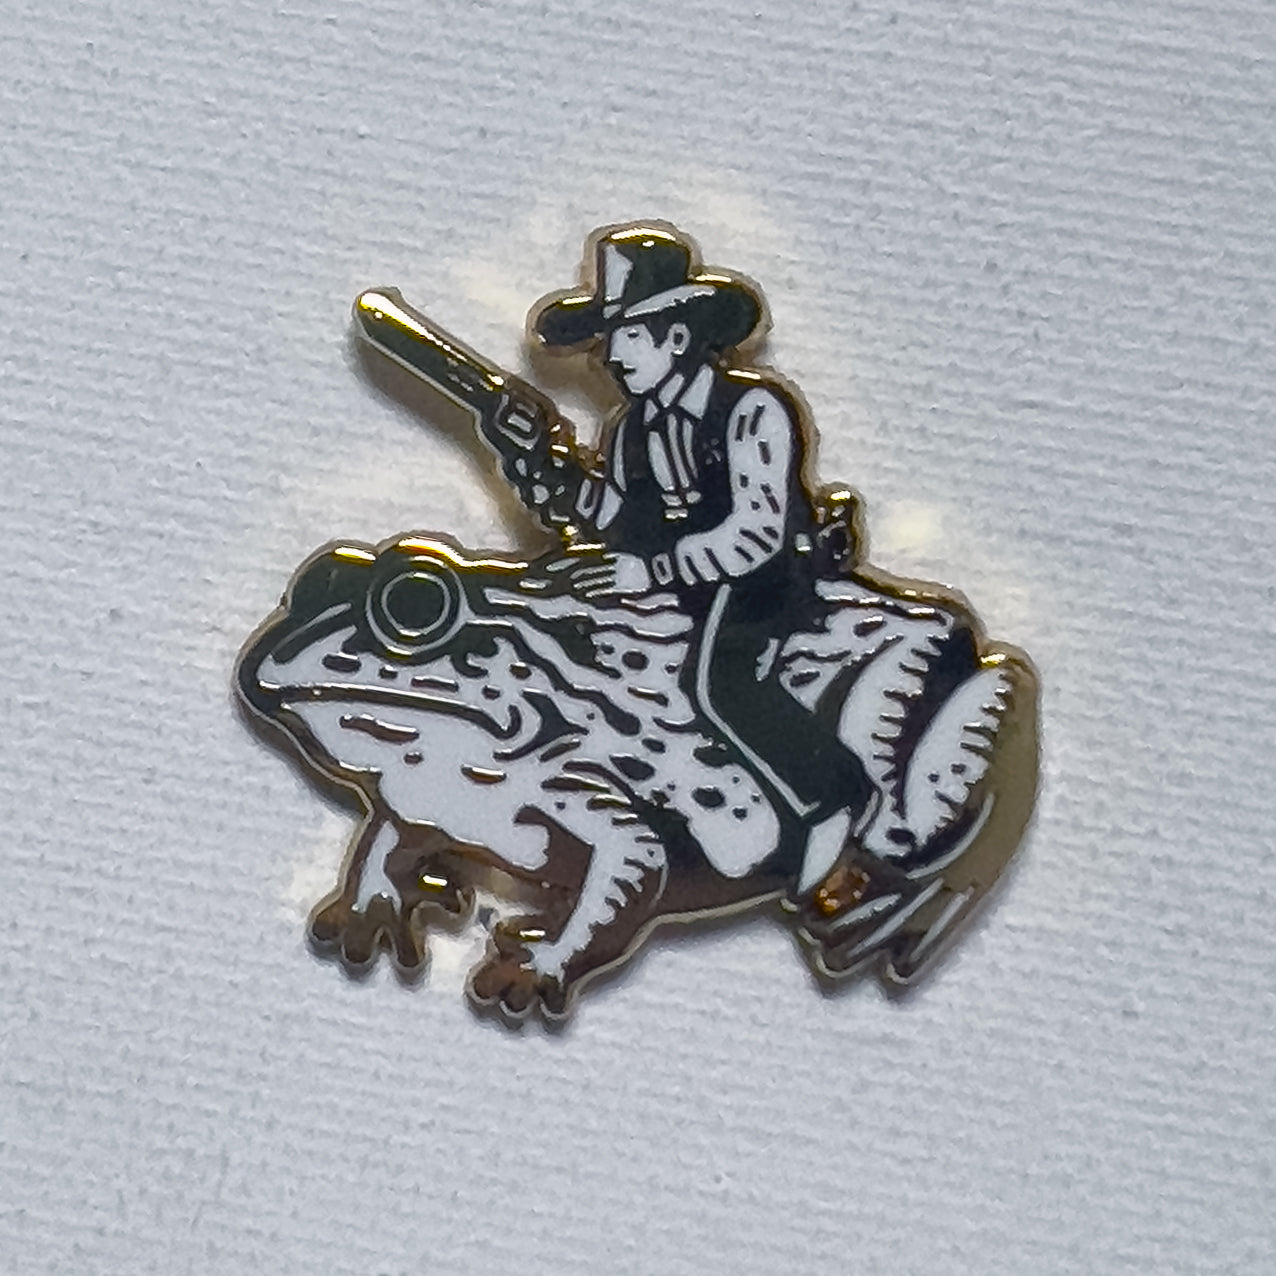 Strike Gently Co - Frog Cowboy Pin